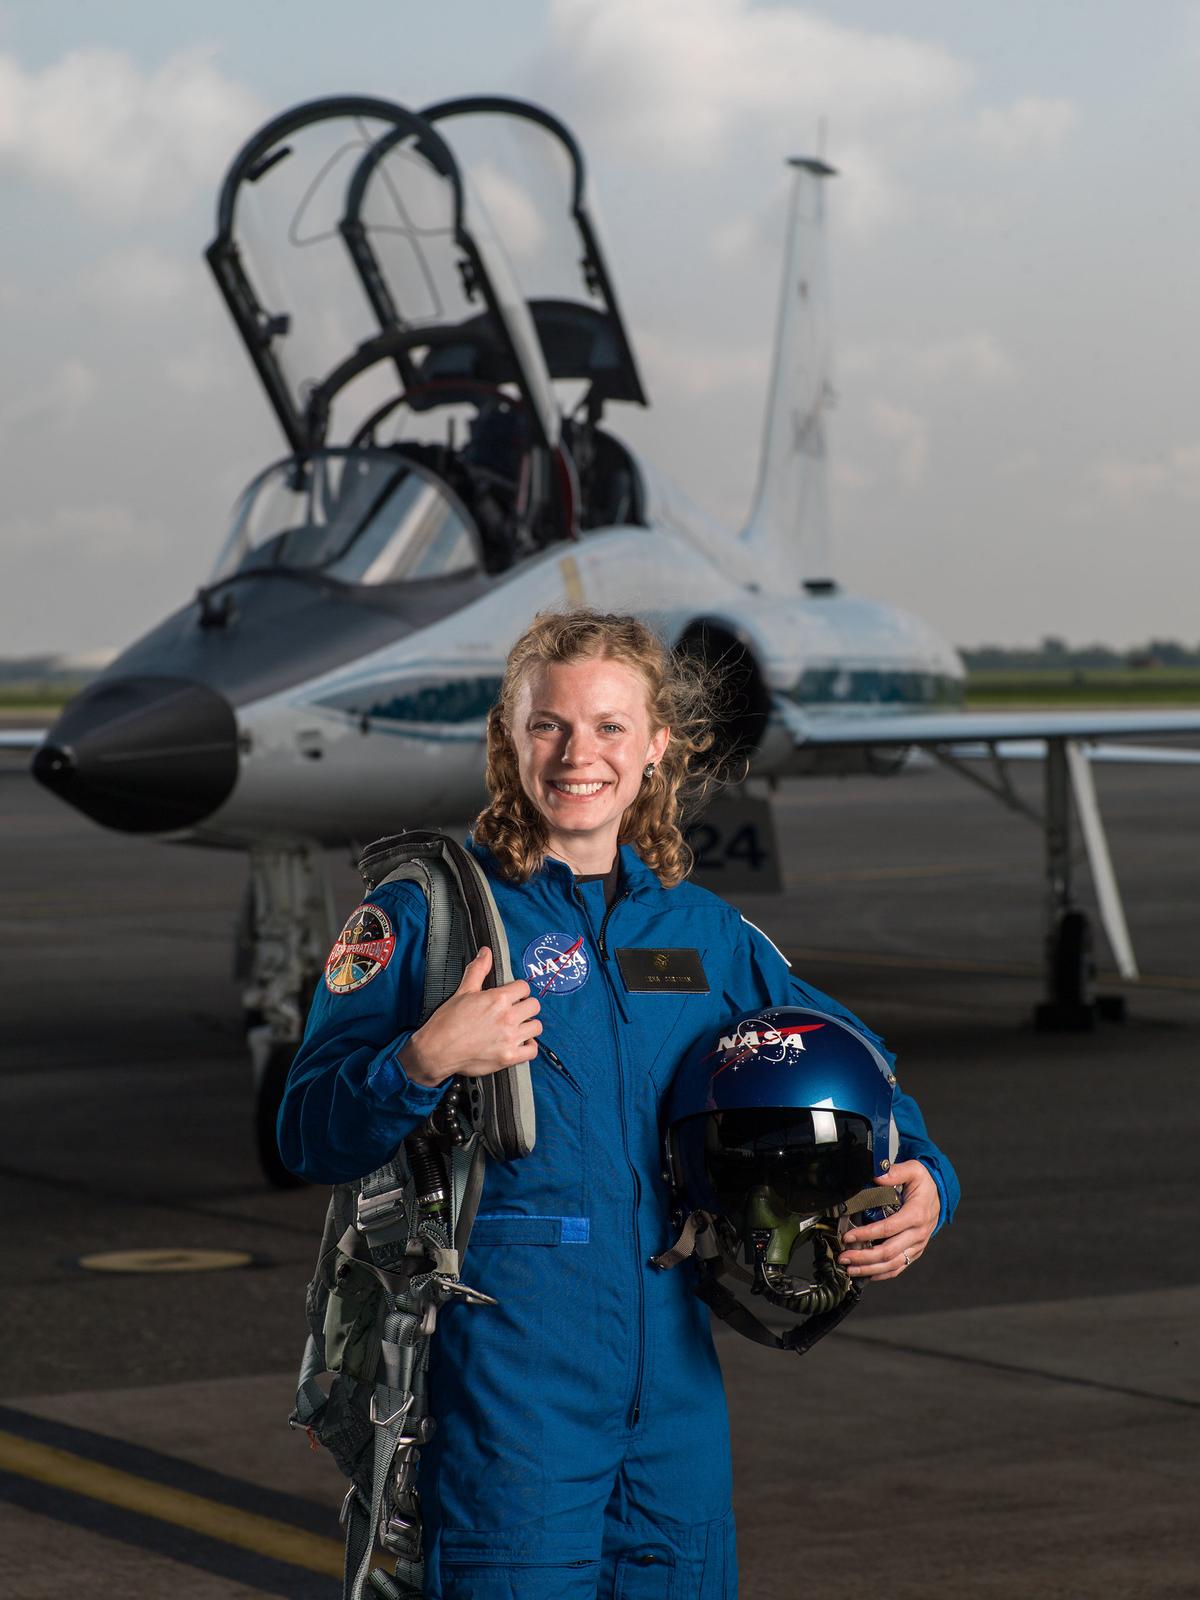 NASA astronaut candidate Zena Cardman pictured at Ellington Field Joint Reserve Base in Houston, Texas, on June 6, 2017 (©NASA | <a href="https://www.flickr.com/photos/nasa2explore/44050868974/in/album-72157698260056092/">Robert Markowitz</a>)